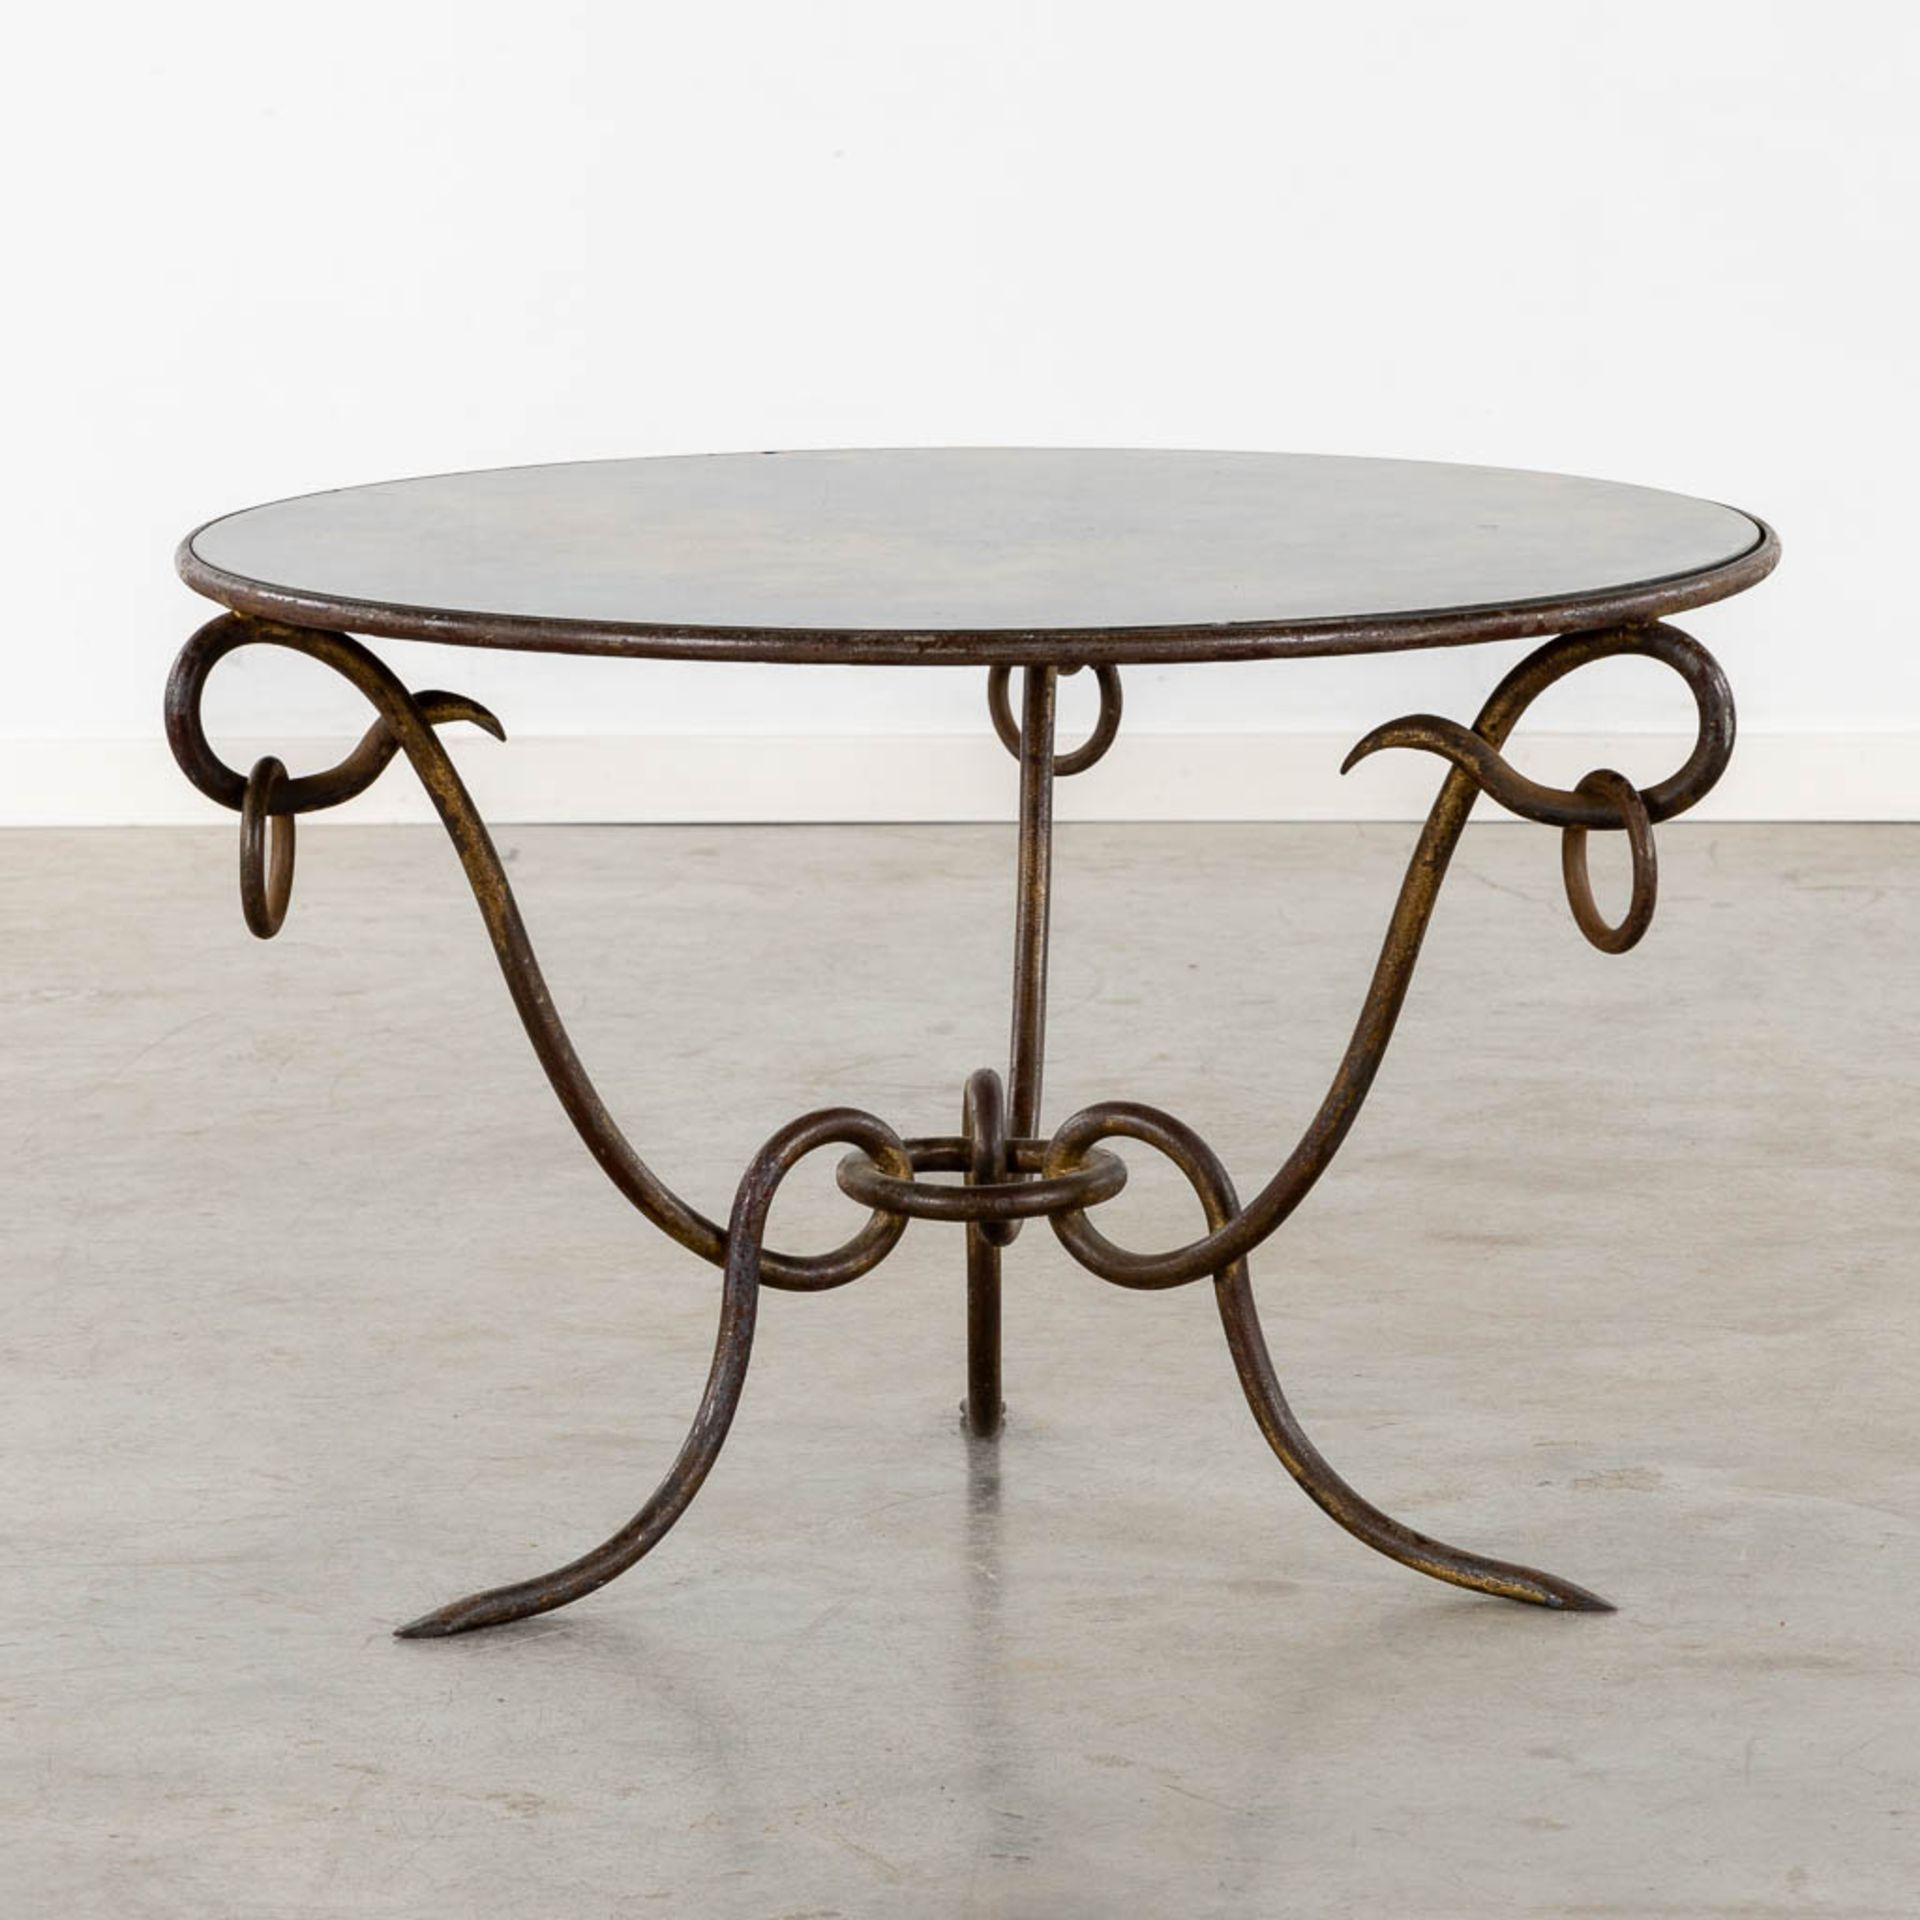 René DROUET (1899-1993) 'Round cofee table' (H:53 x D:84 cm) - Bild 5 aus 11